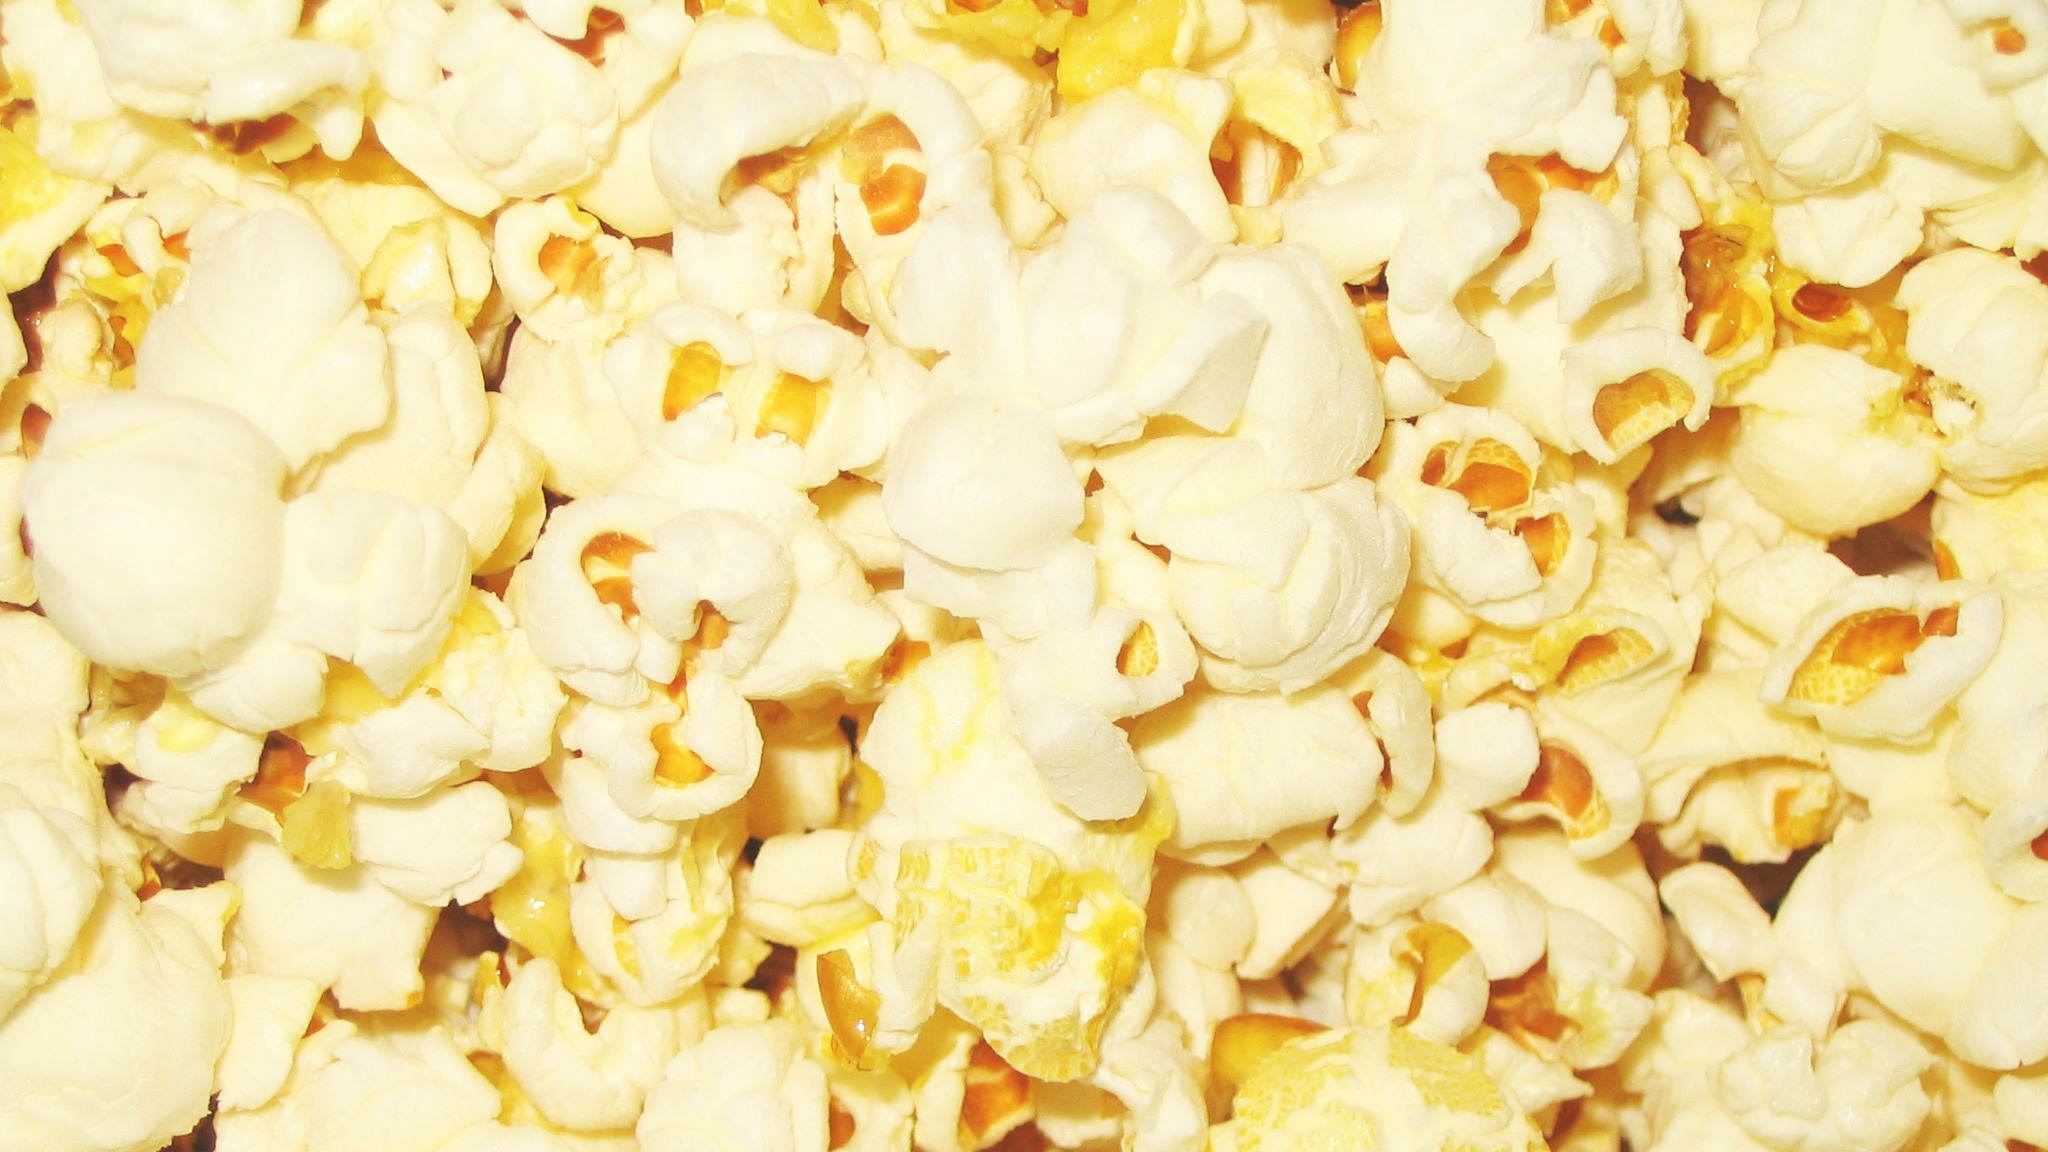 Popcorn Wallpapers